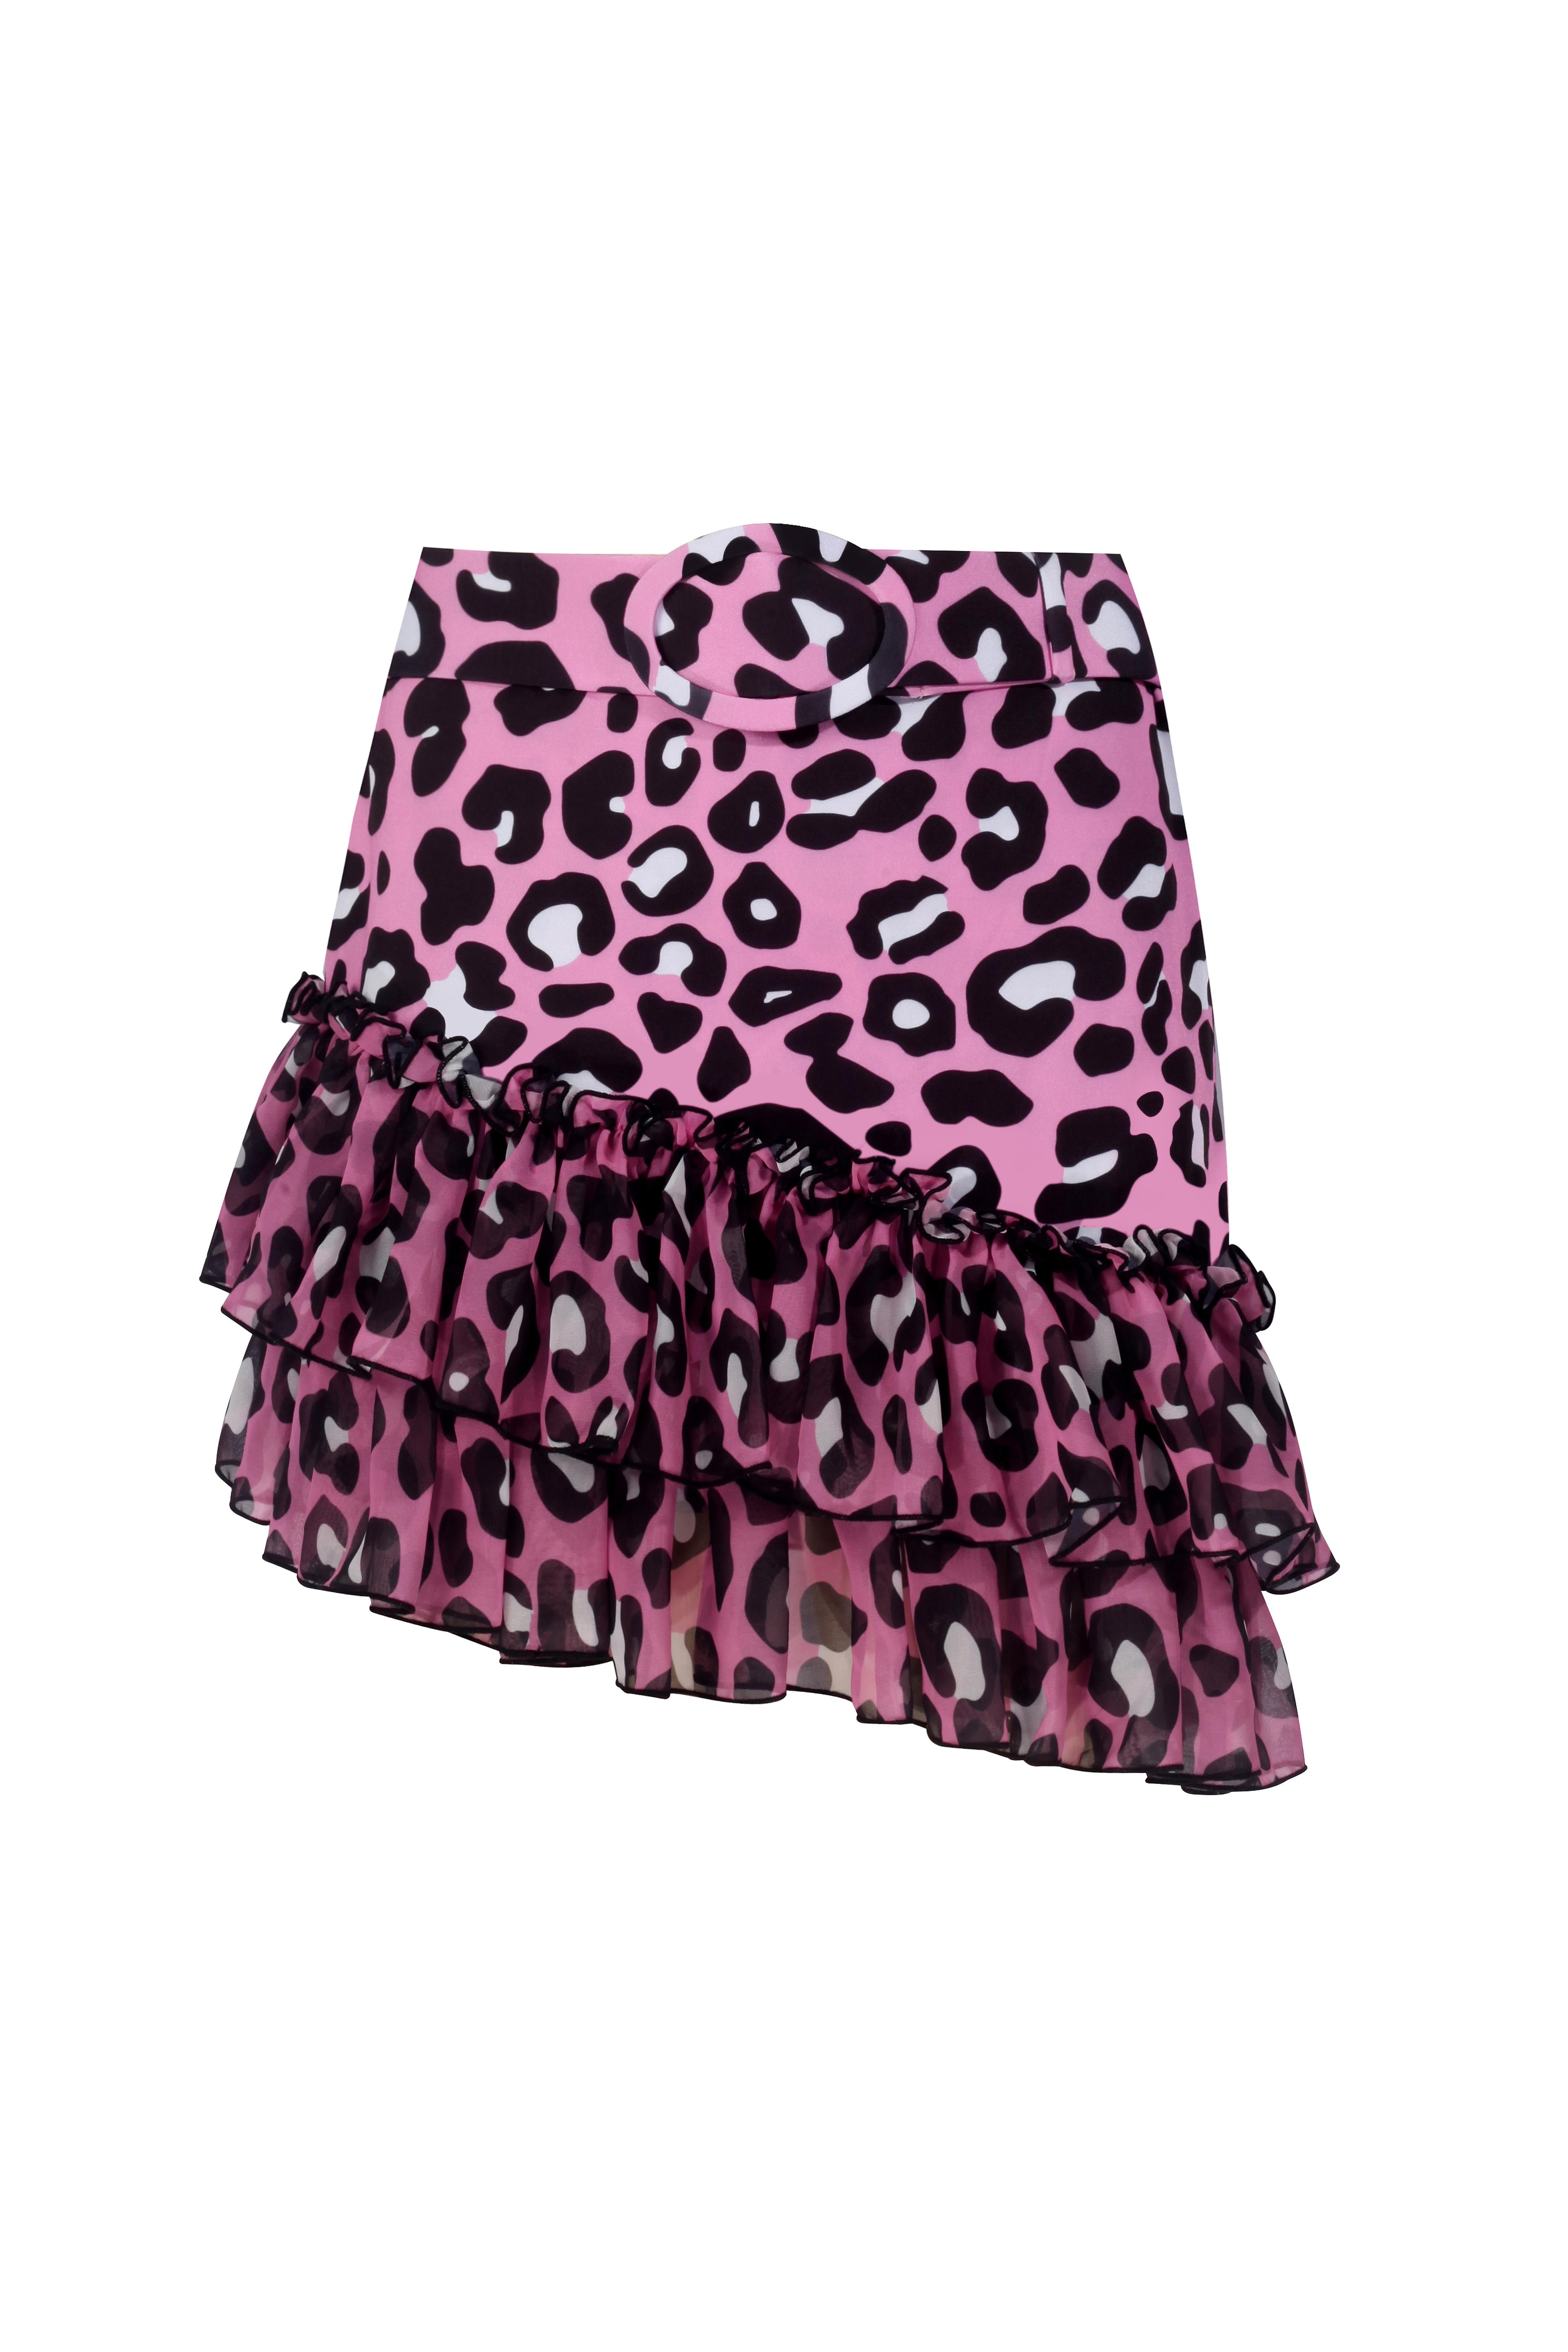 Tigra Pink Leo Skirt